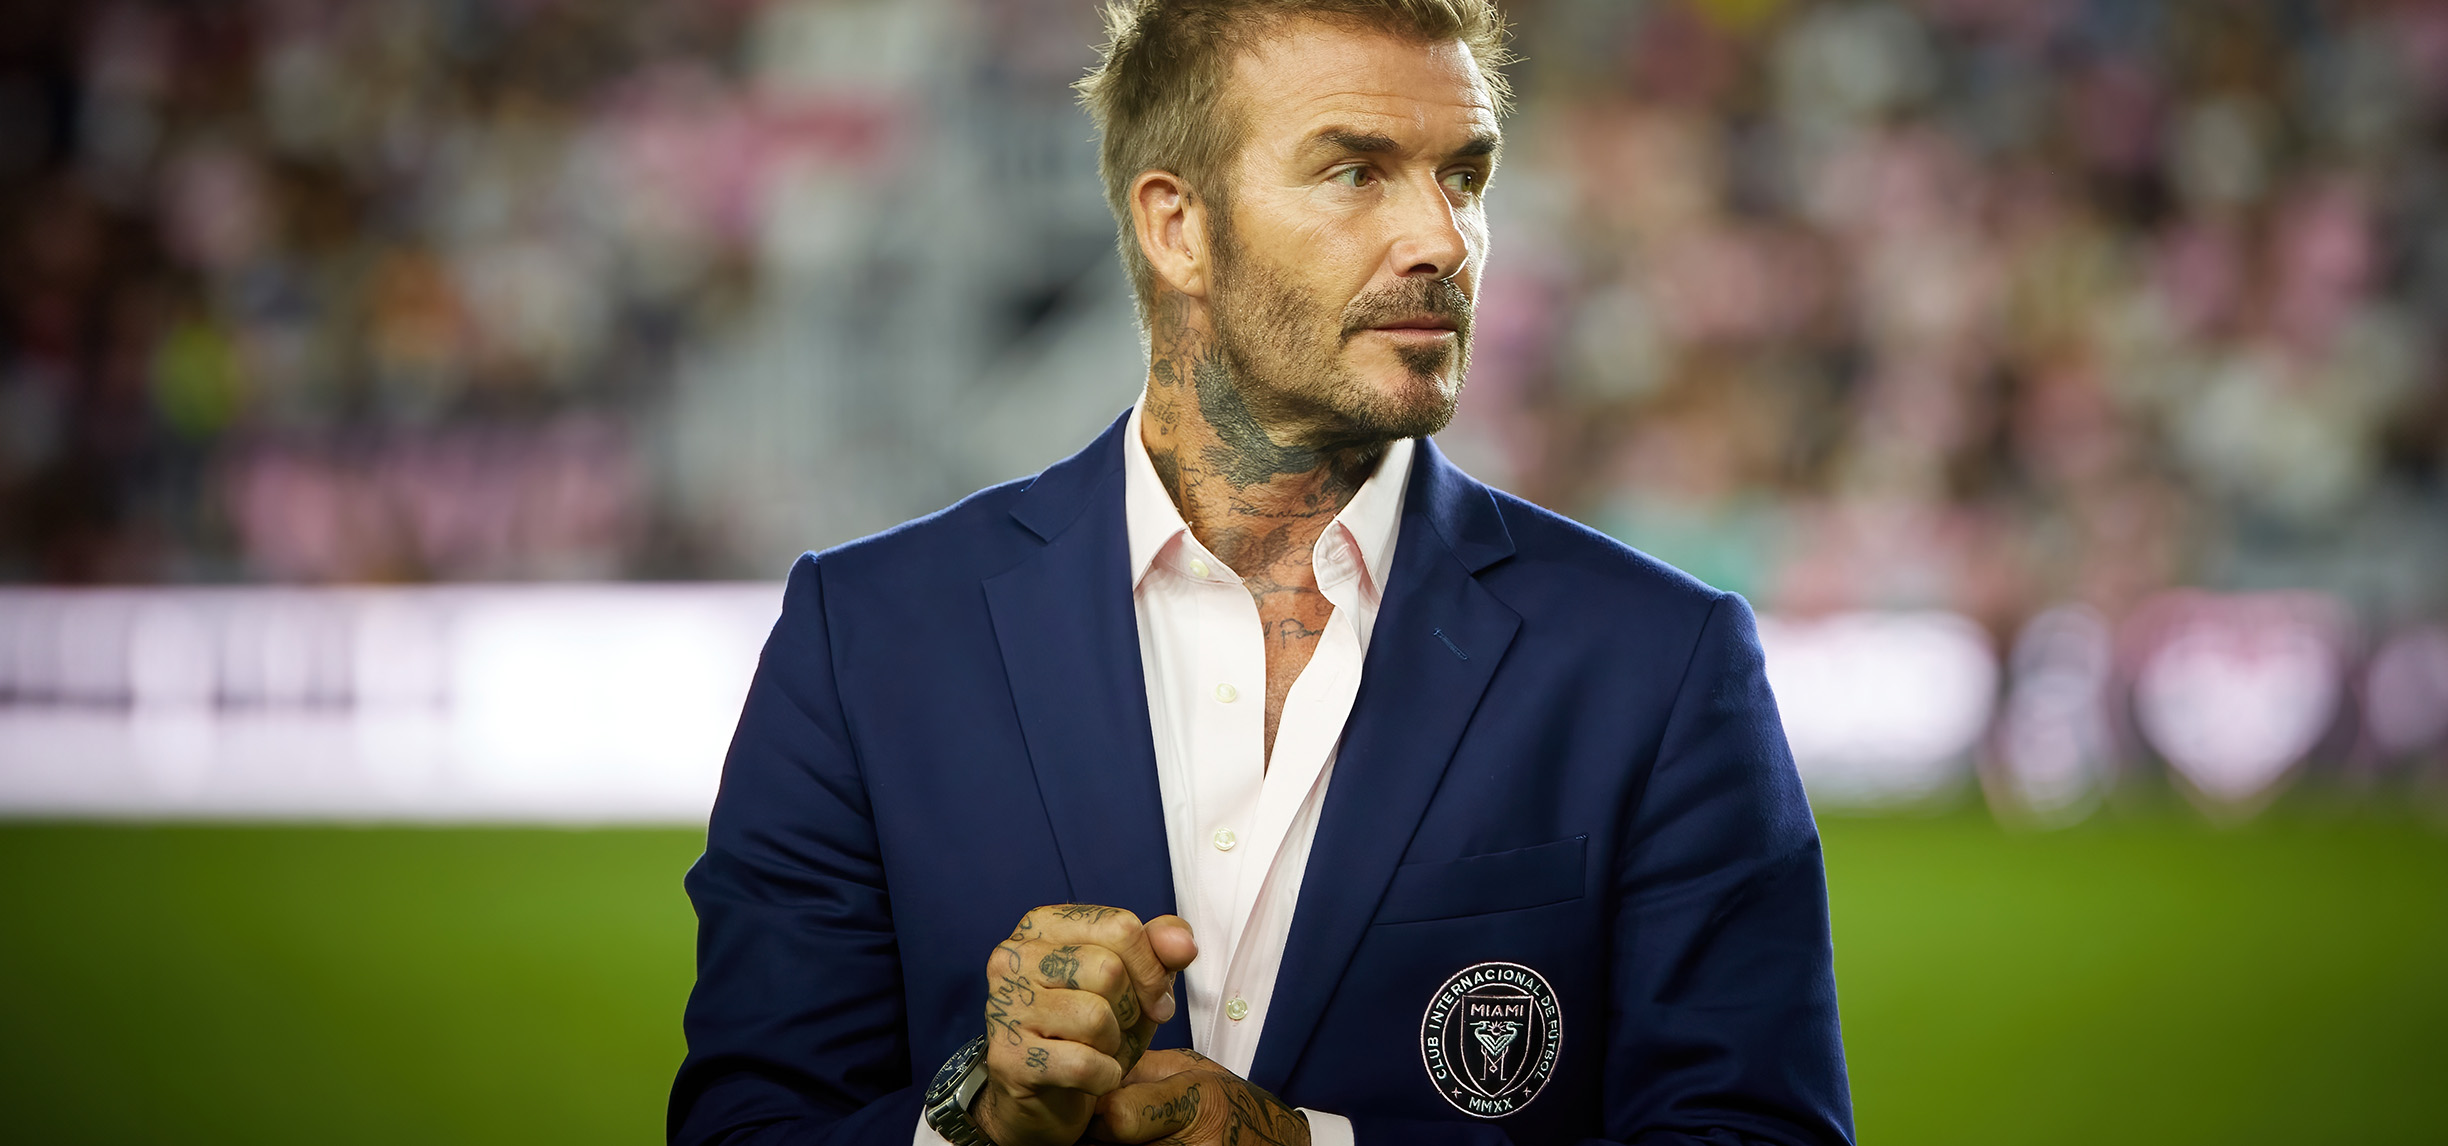 Wrist Goals: David Beckham’s Enviable Luxury Watch Collection